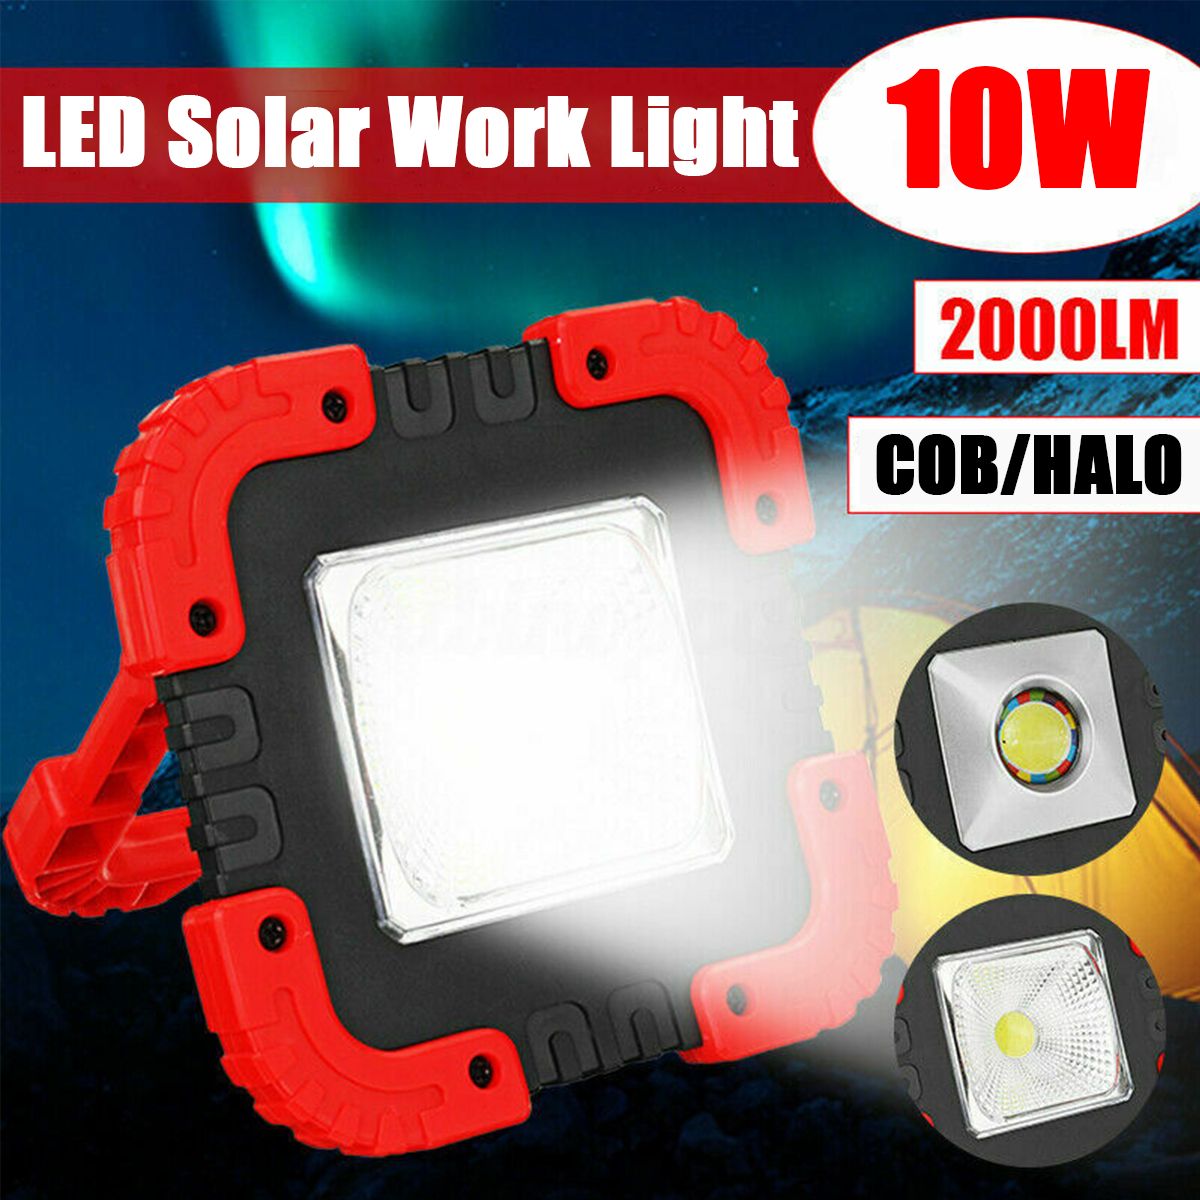 Solar-COBHALO-LED-Work-Light-High-Bright-180deg-Rotation-Aplication-Widely-1674107